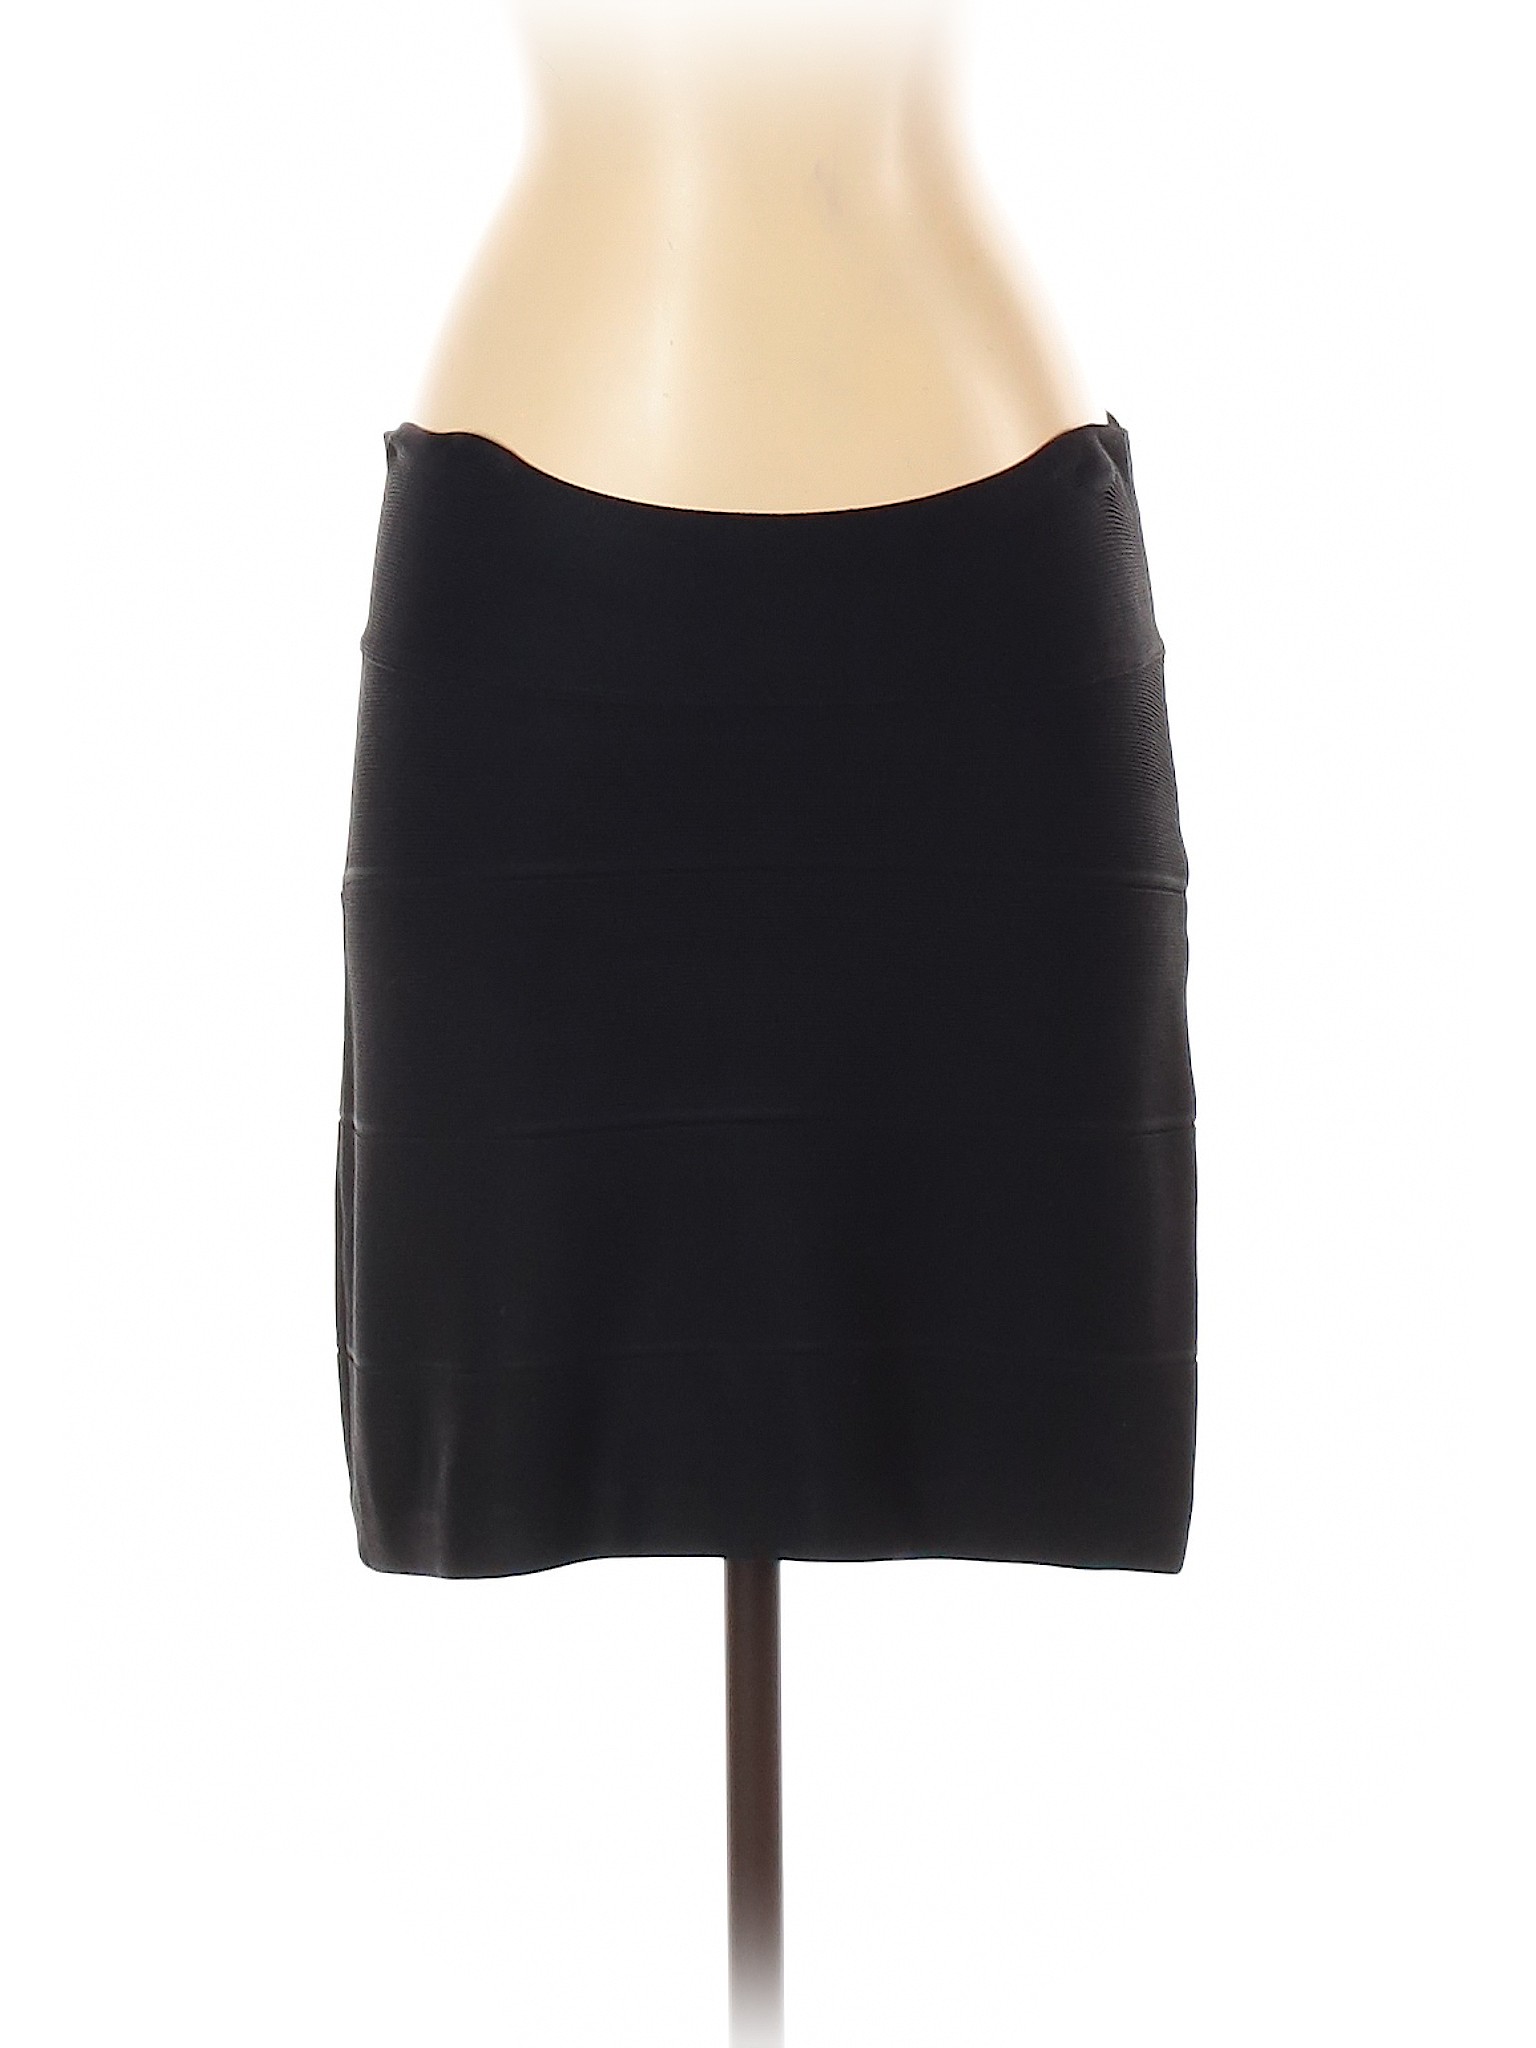 BCBGMAXAZRIA Women Black Casual Skirt S | eBay